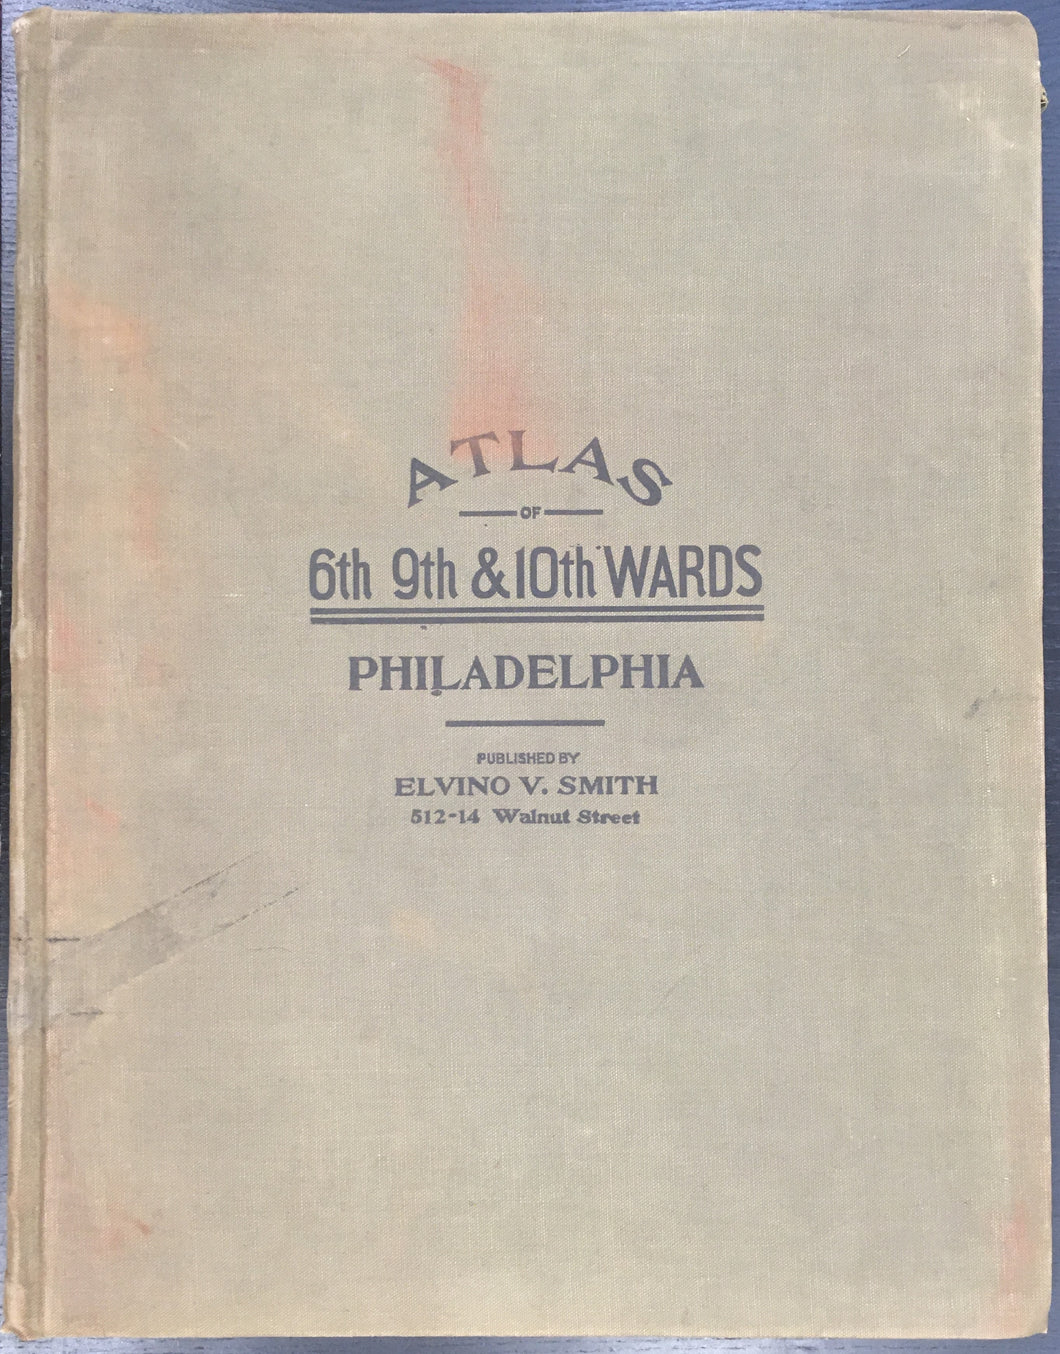 Smith, Elvino. V. “Atlas of the Wards of the City of Philadelphia: Wards: 6, 9, & 10.”  [Center City].  1921